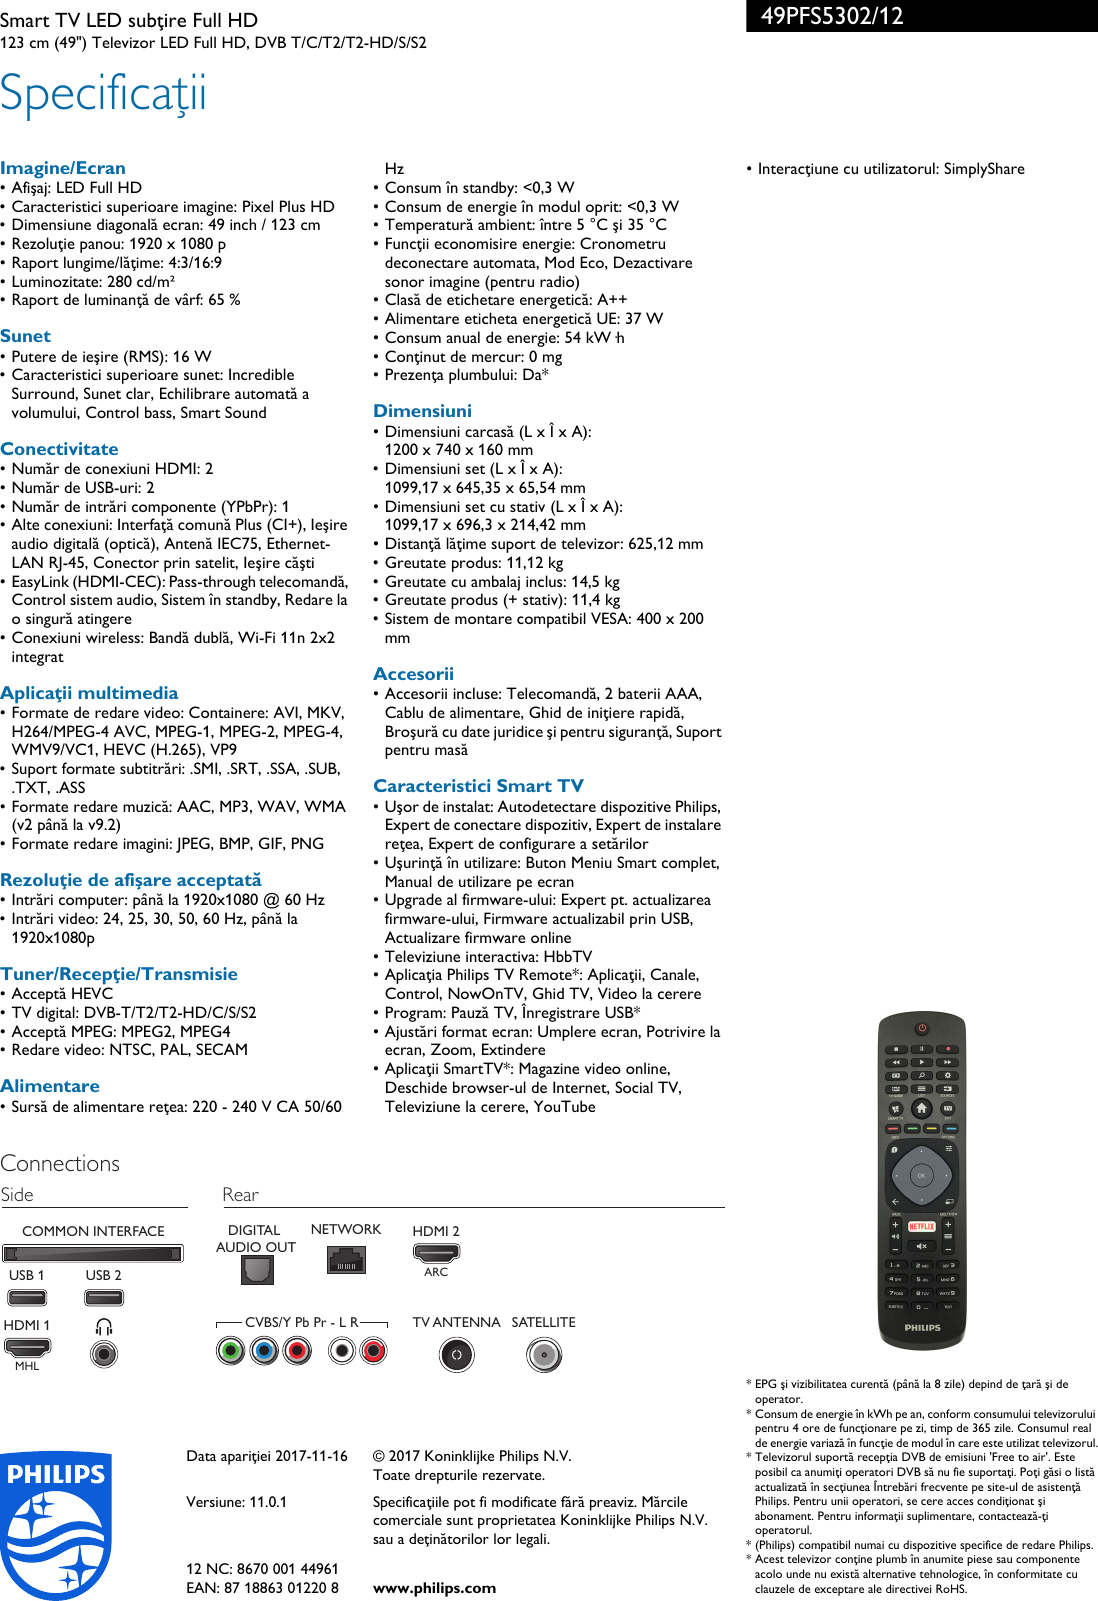 Page 3 of 3 - Philips 49PFS5302/12 Smart TV LED, Subţire, Full HD Cu Pixel Plus User Manual Pliant 49pfs5302 12 Pss Ronro